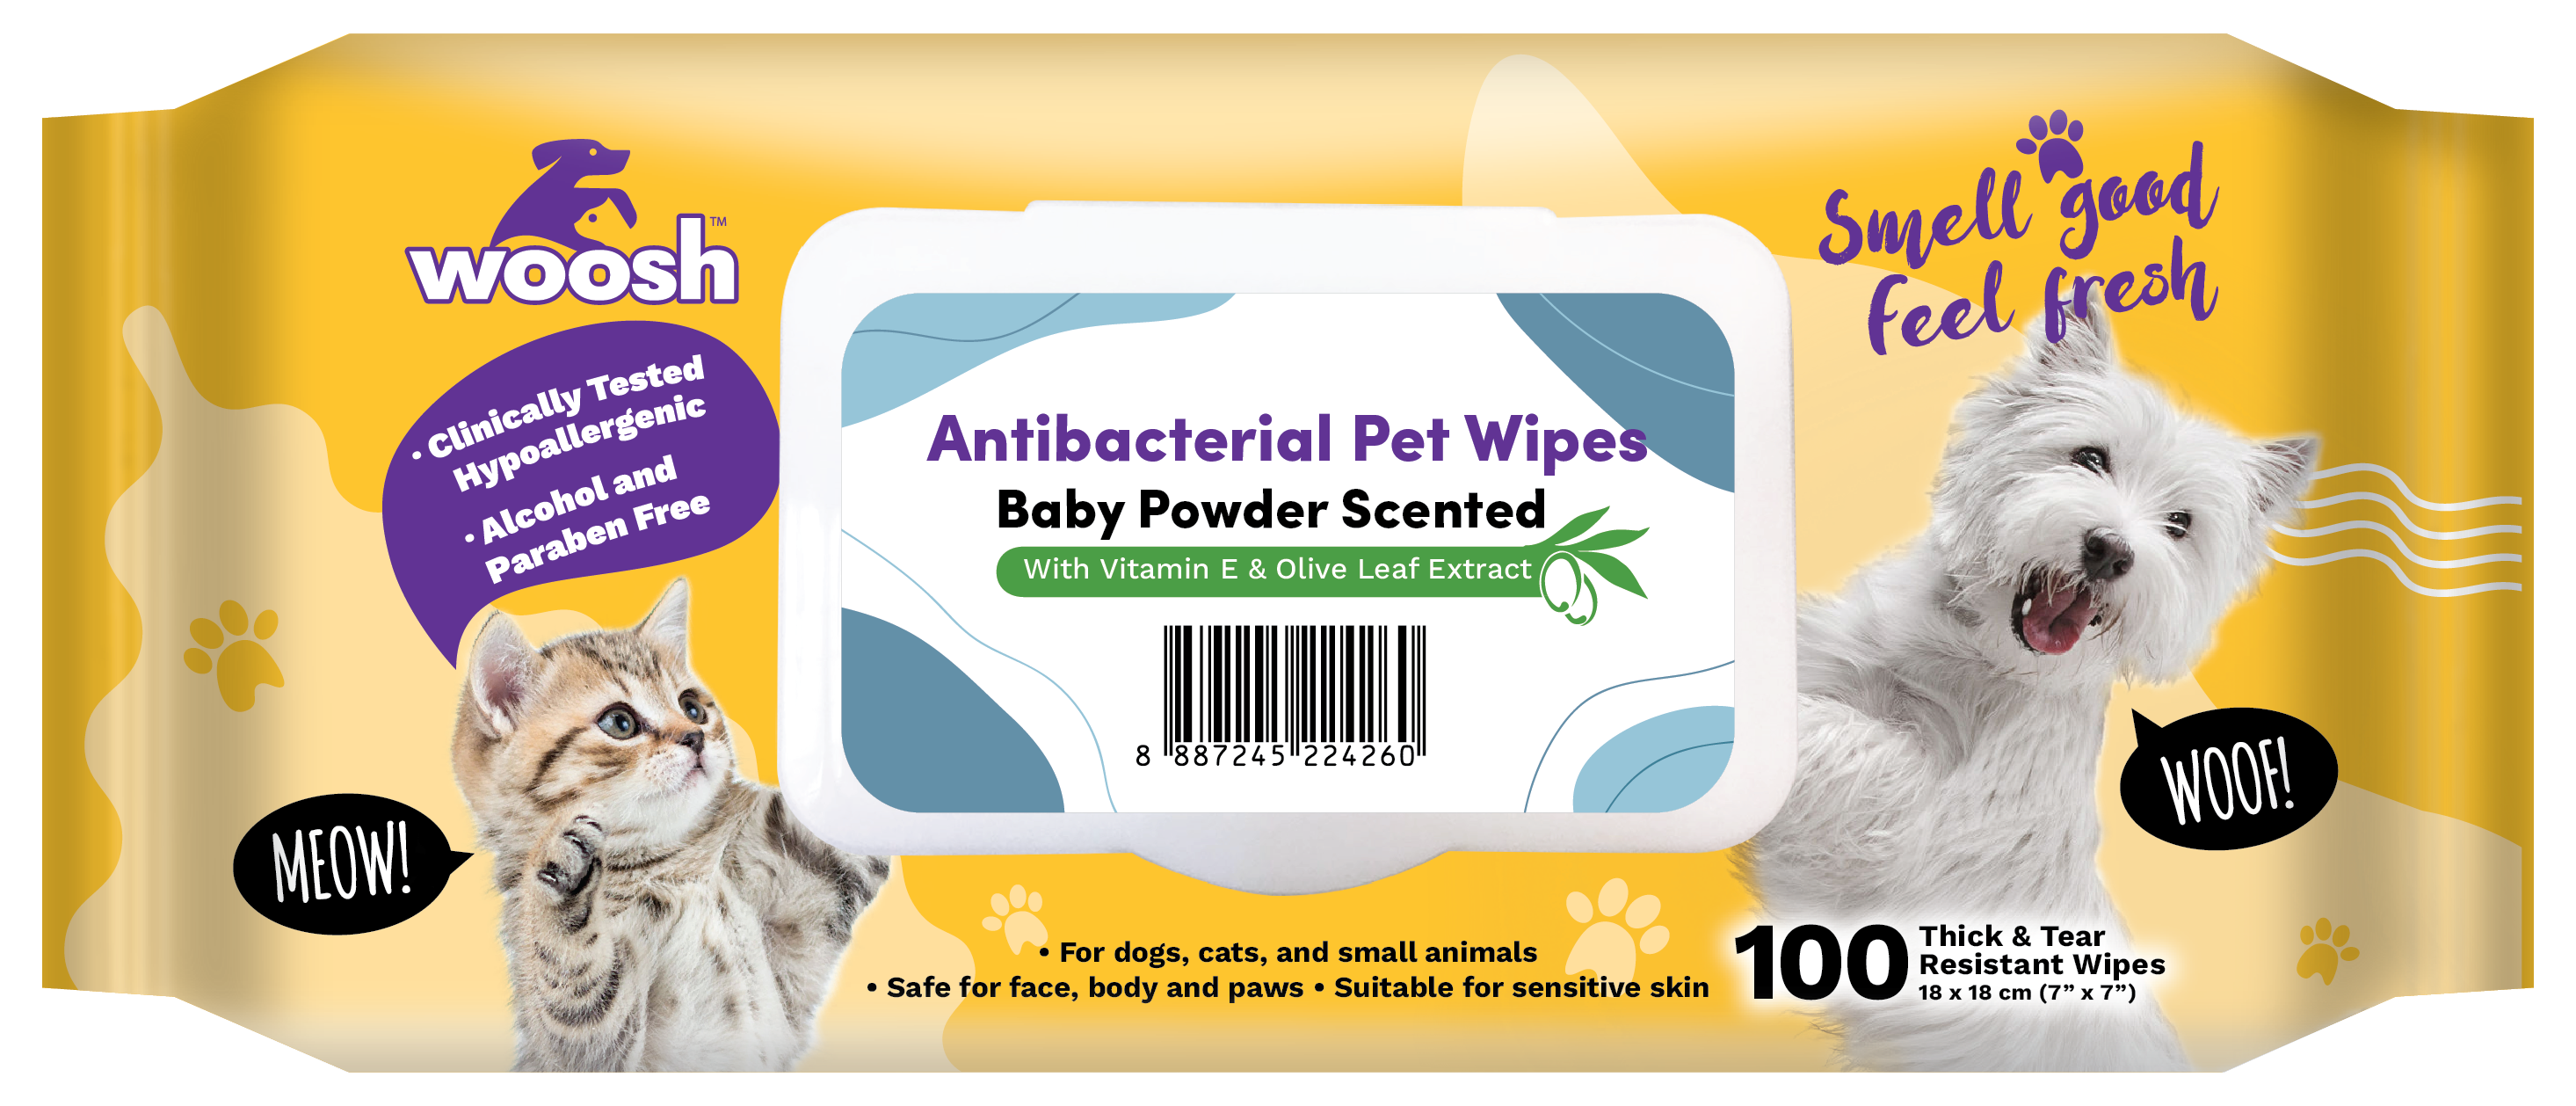 Woosh Antibacterial Pet Wipes